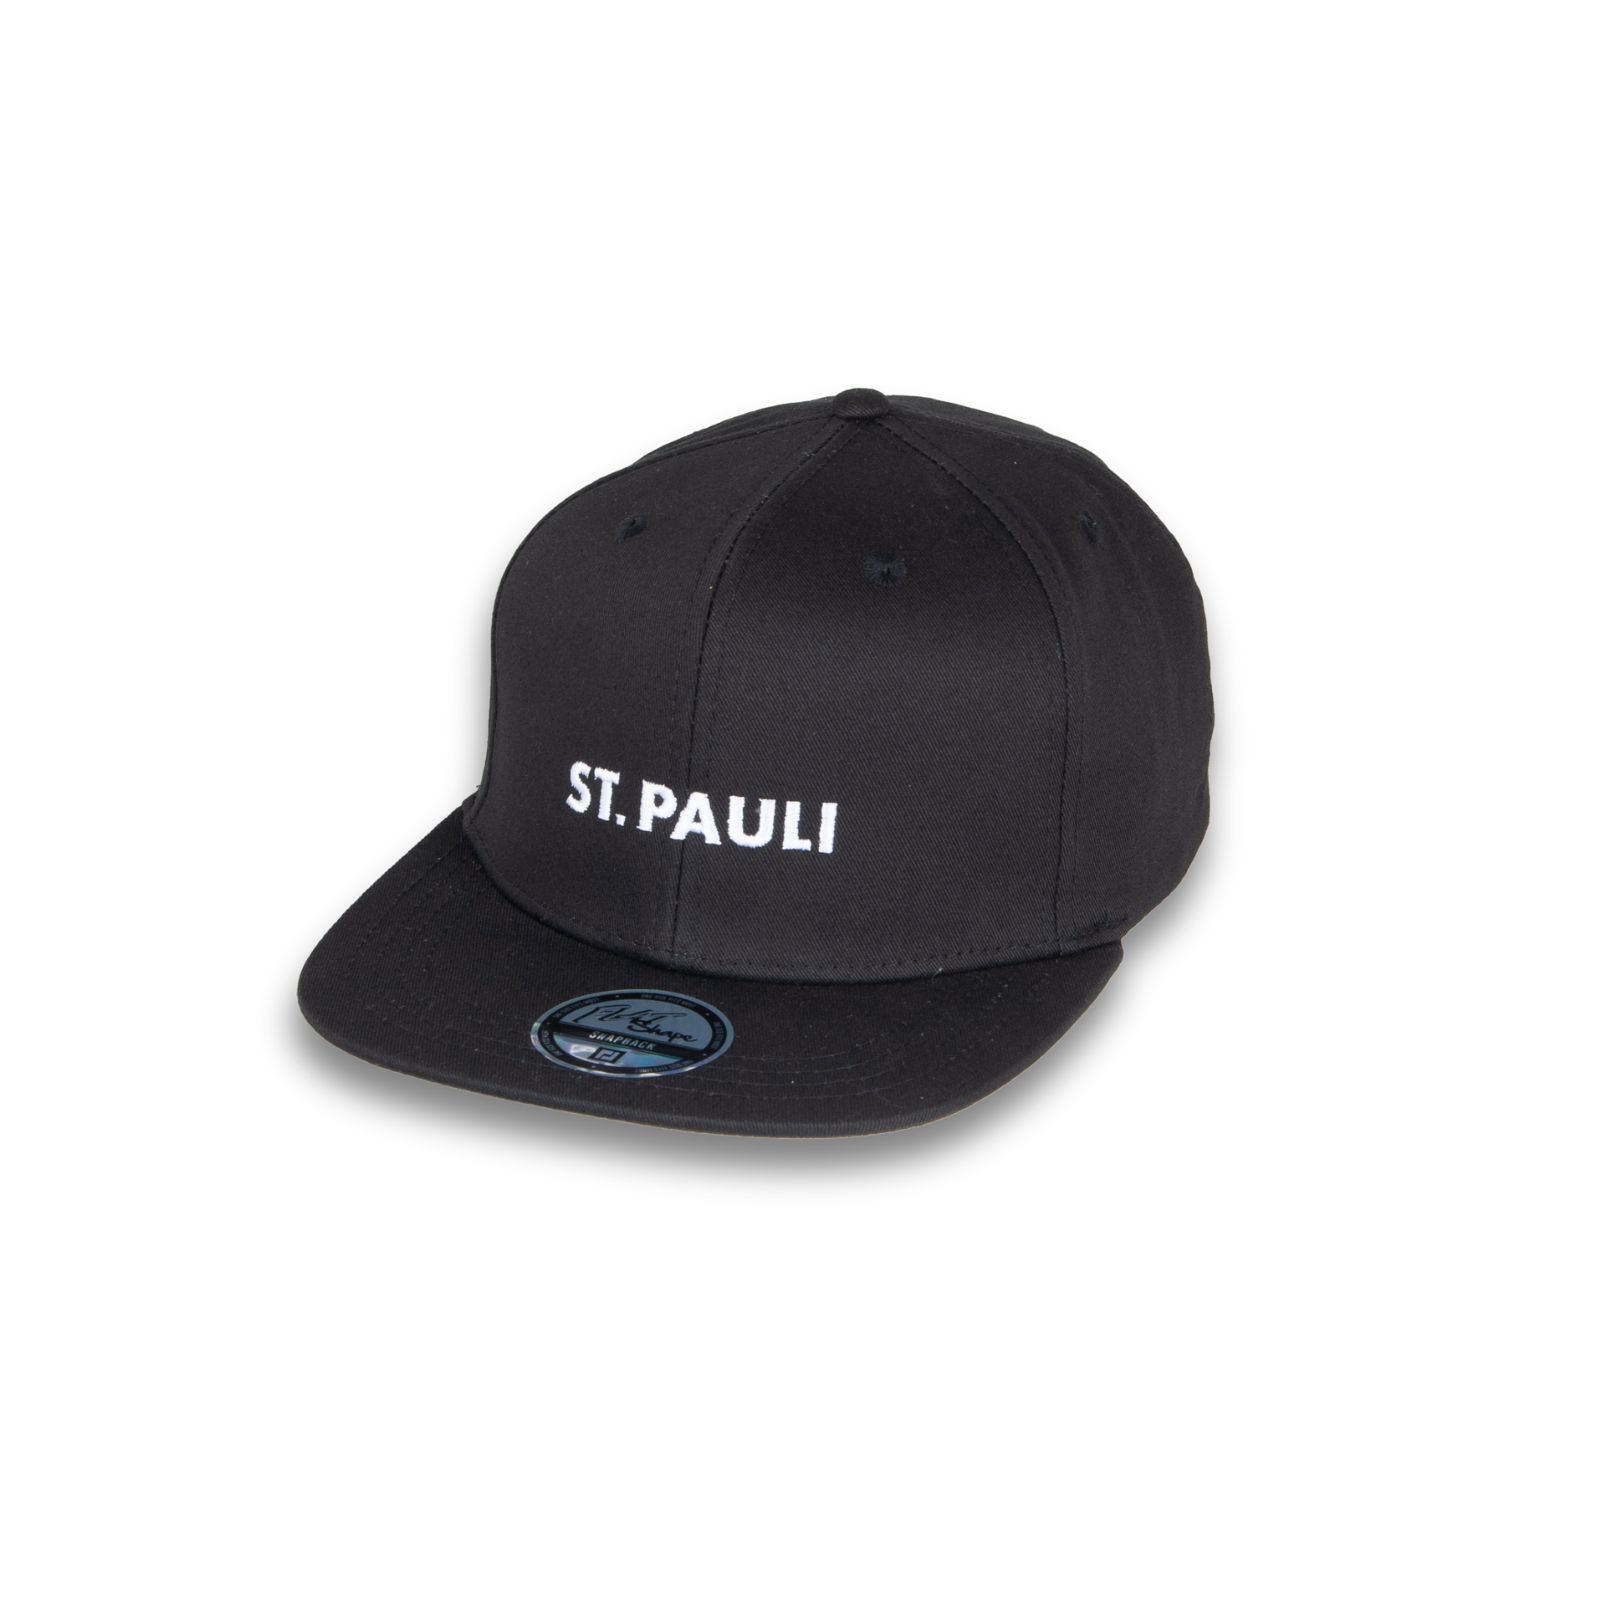 FC St. Pauli - Kappe Flatpeak ST. PAULI Schriftzug - schwarz